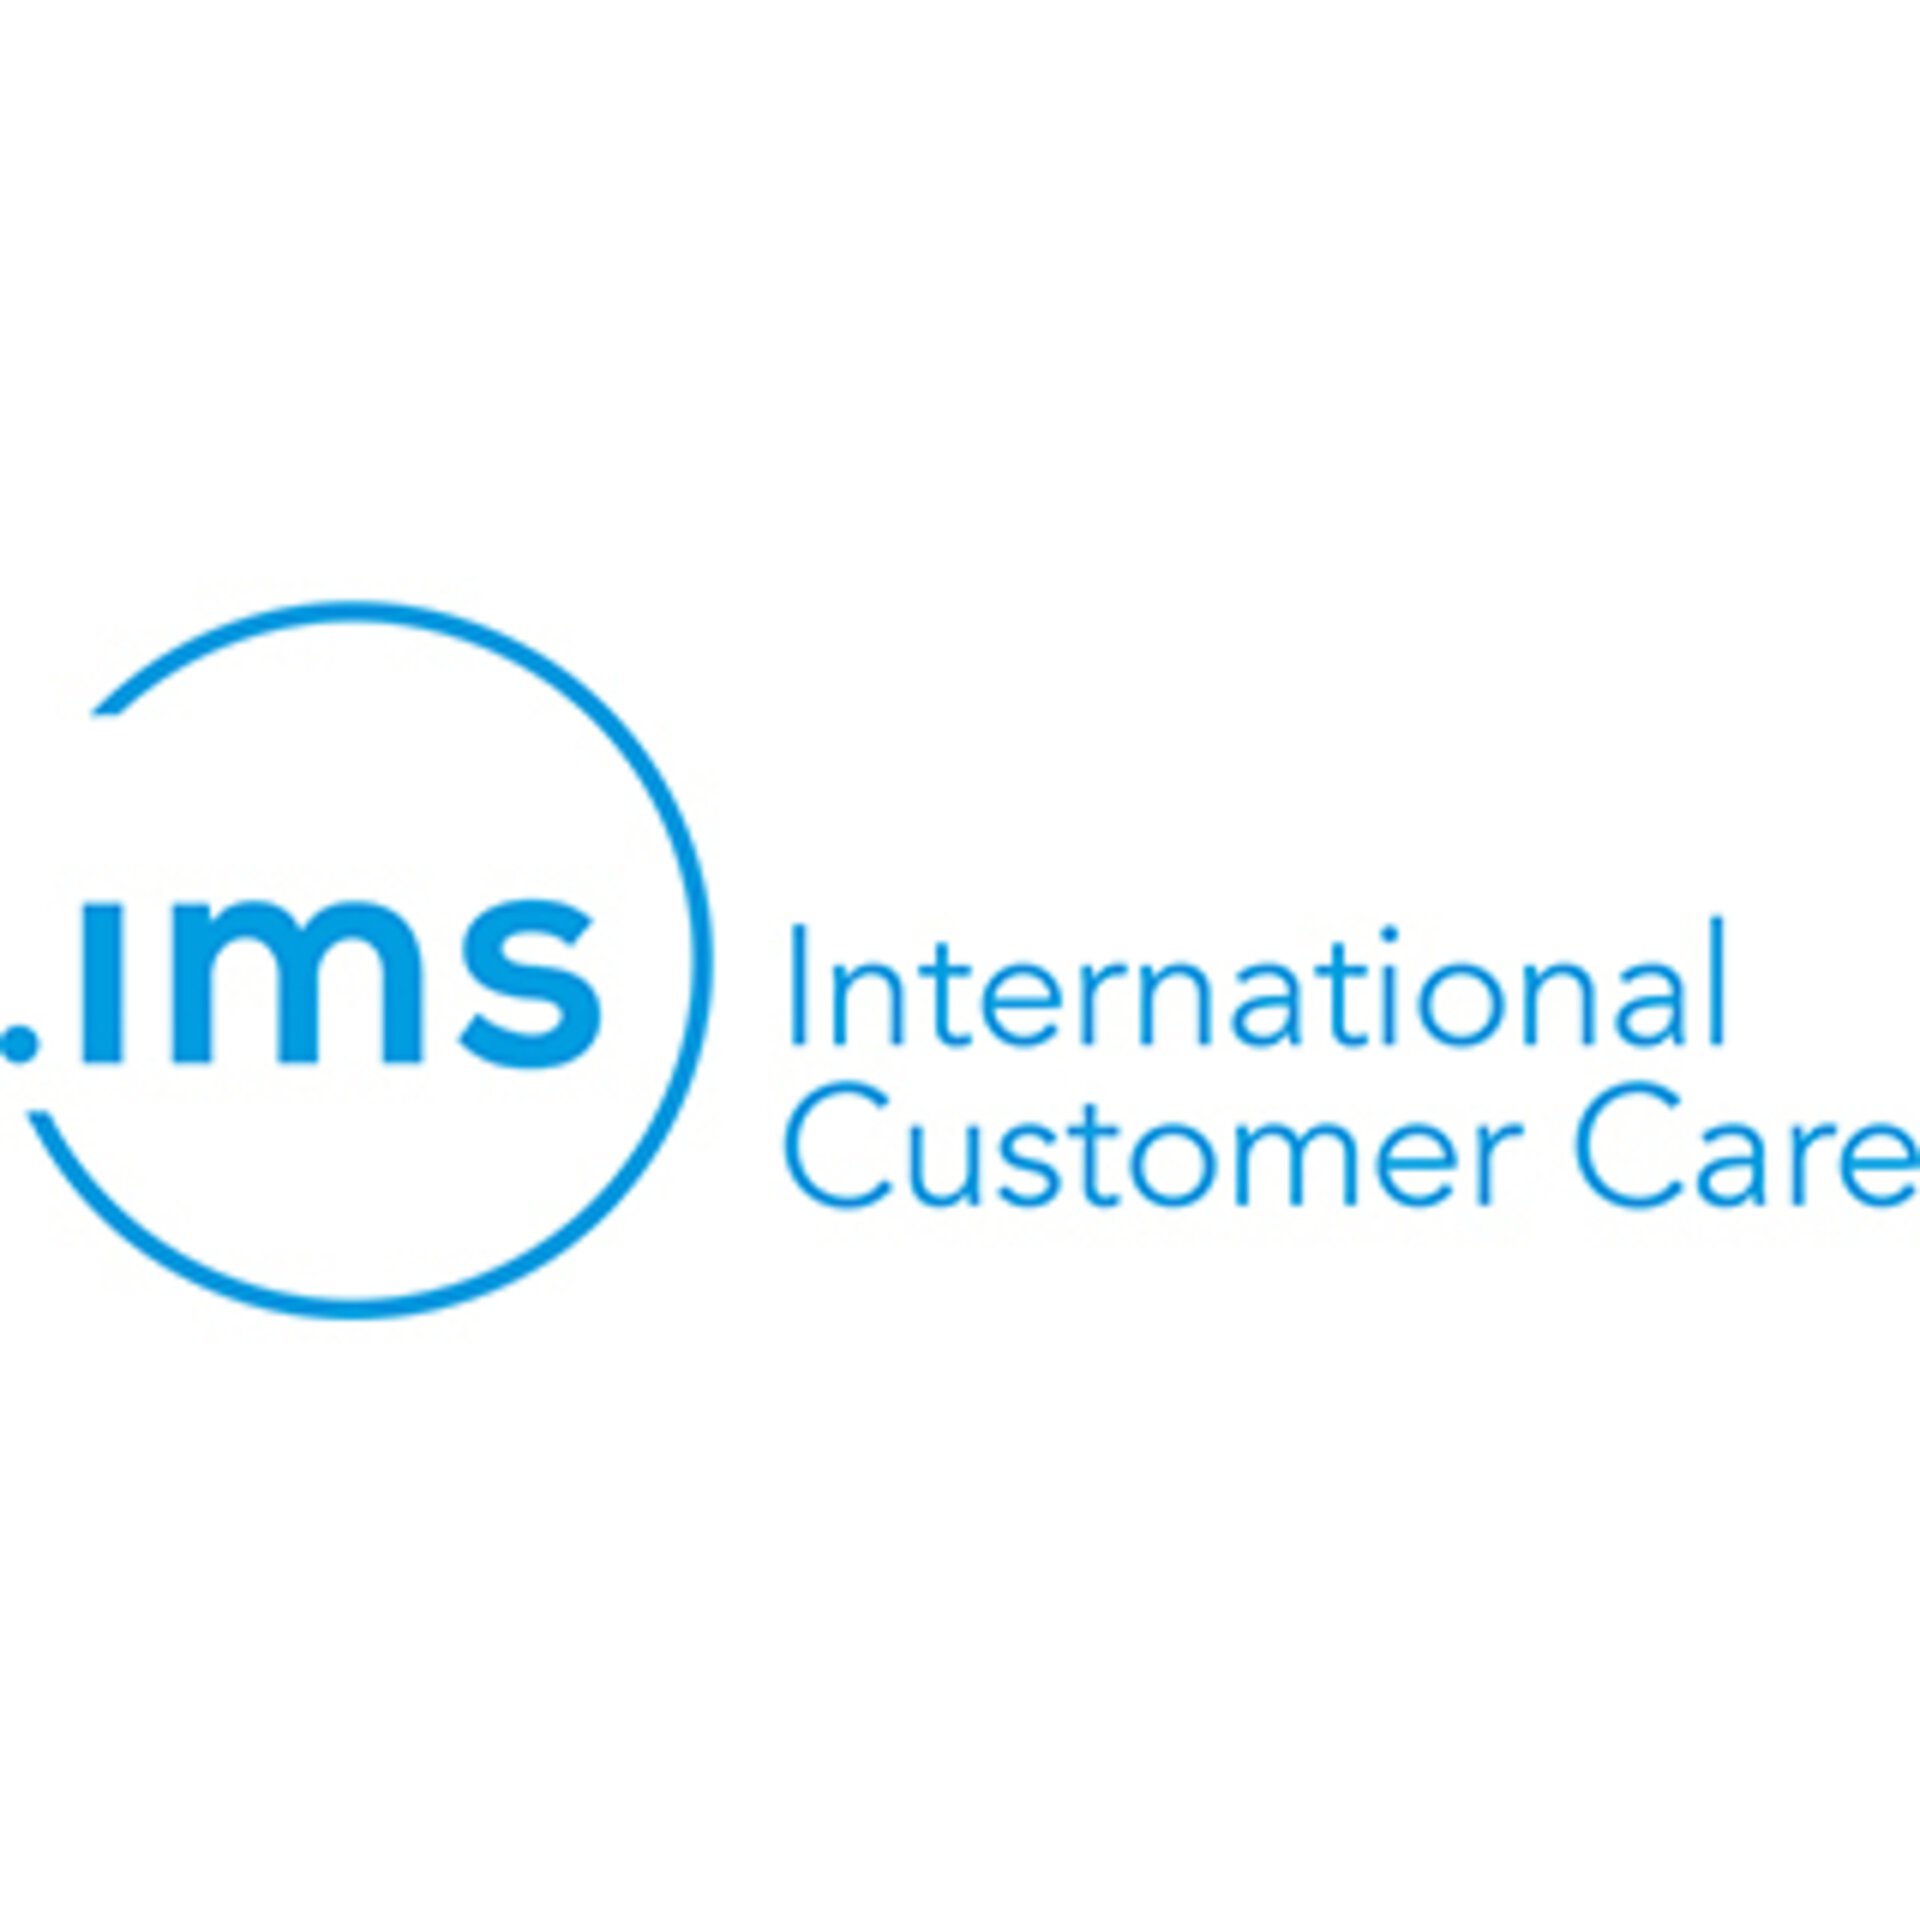 Logo "IMS - international Customer Care"